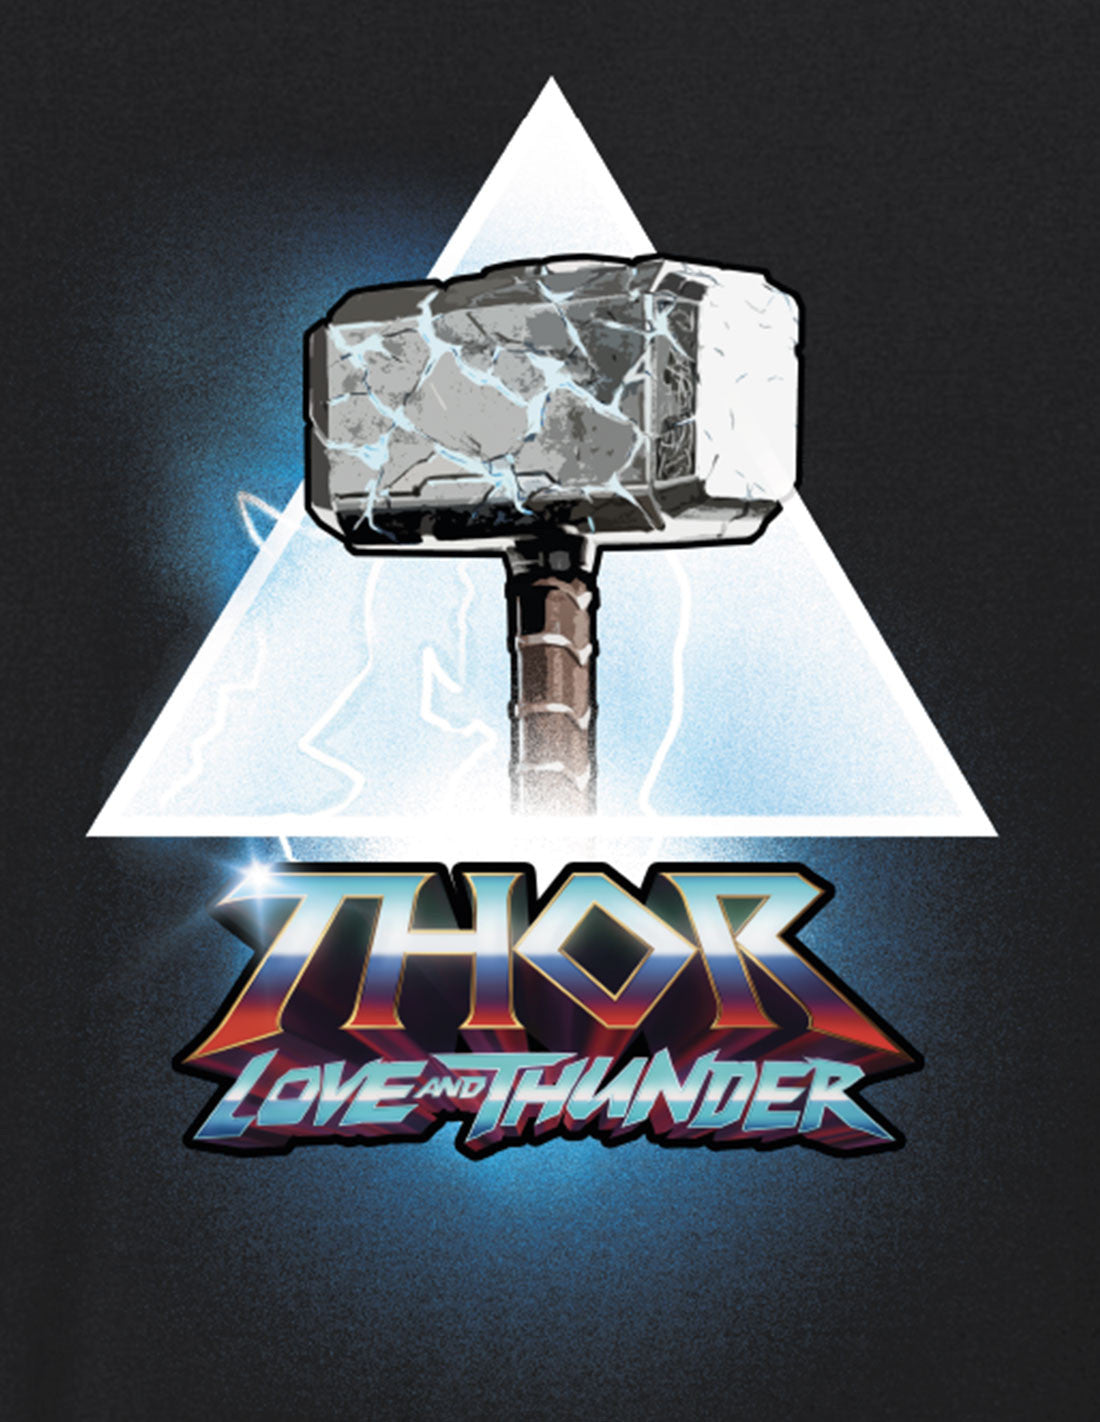 Thor Love and Thunder Marvel T-shirt - Mjolnir